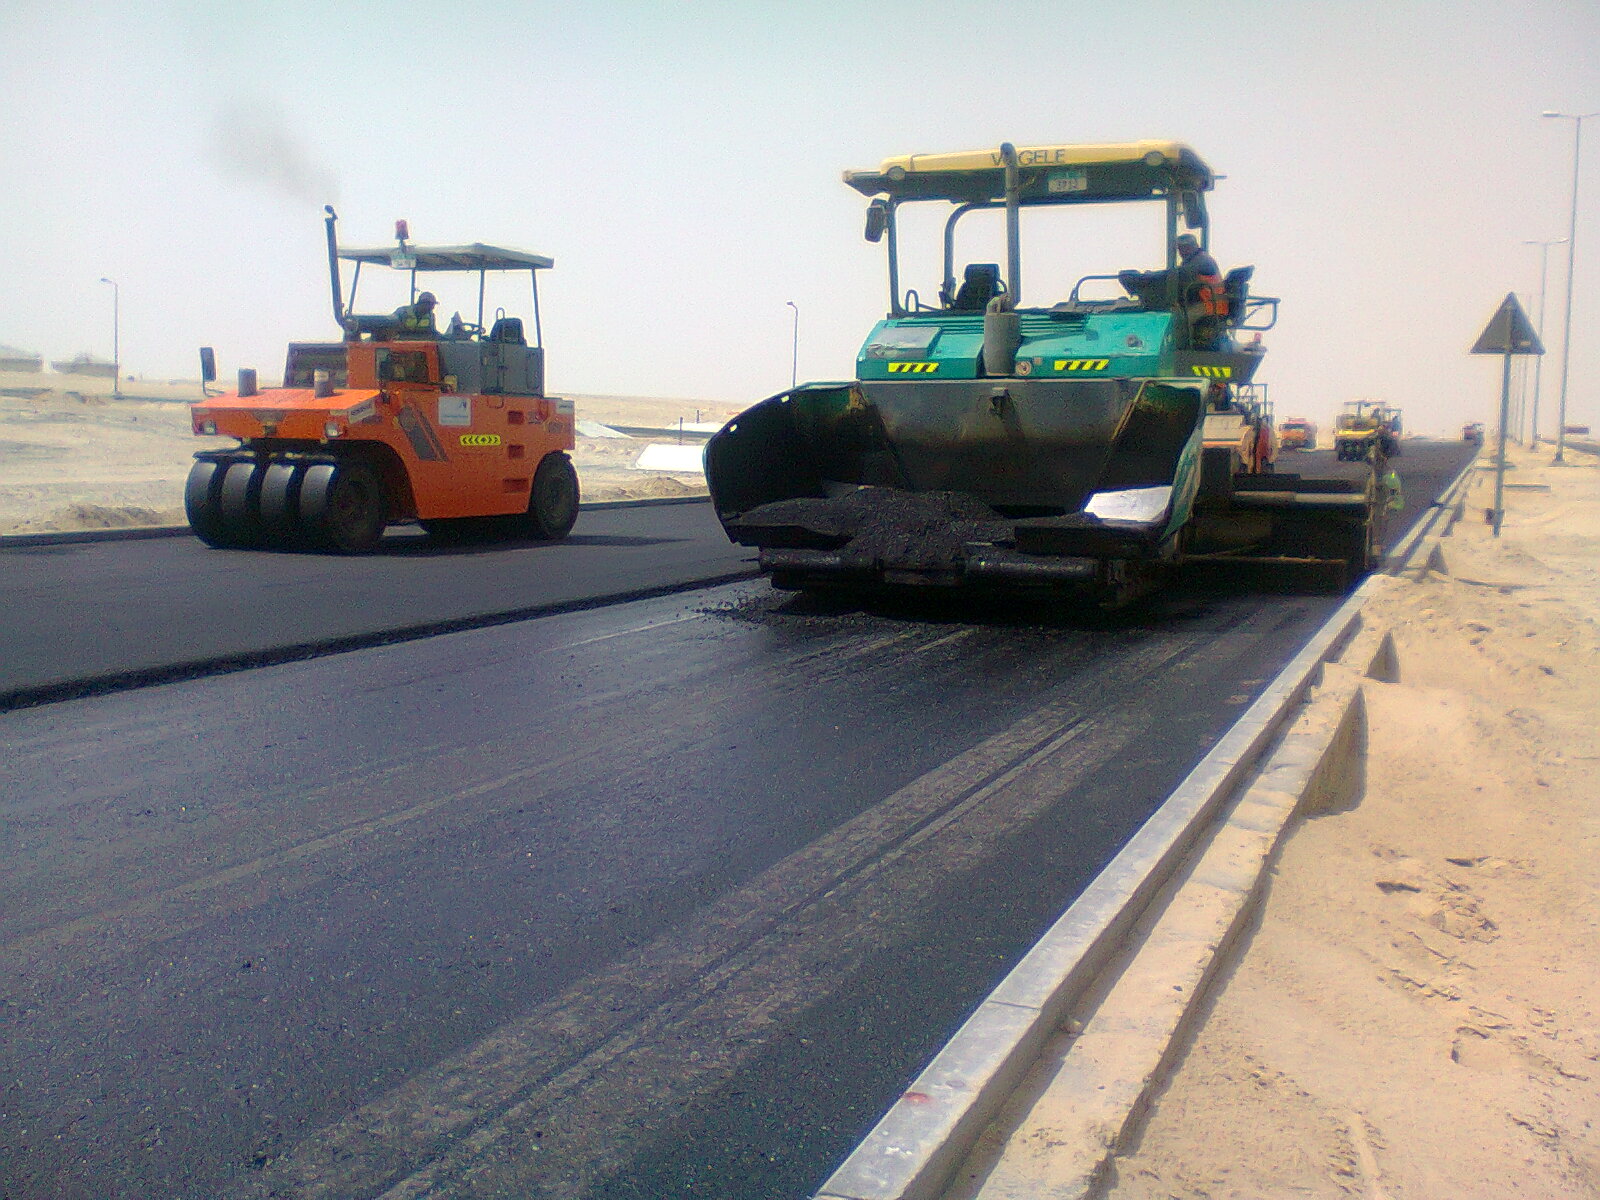 File:Road construction in progress.jpg - Wikimedia Commons